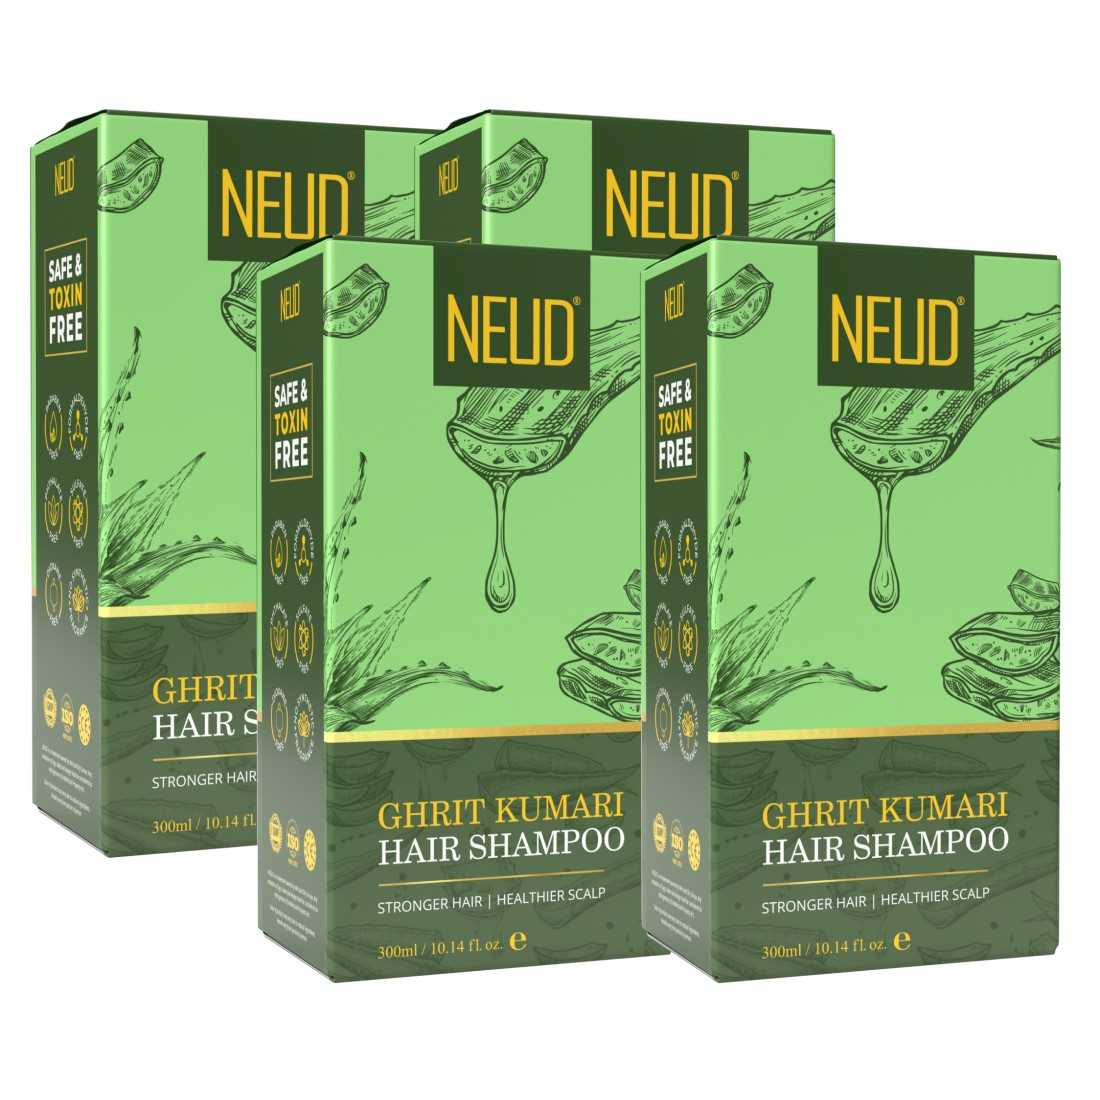 NEUD Premium Ghrit Kumari Hair Shampoo for Men & Women